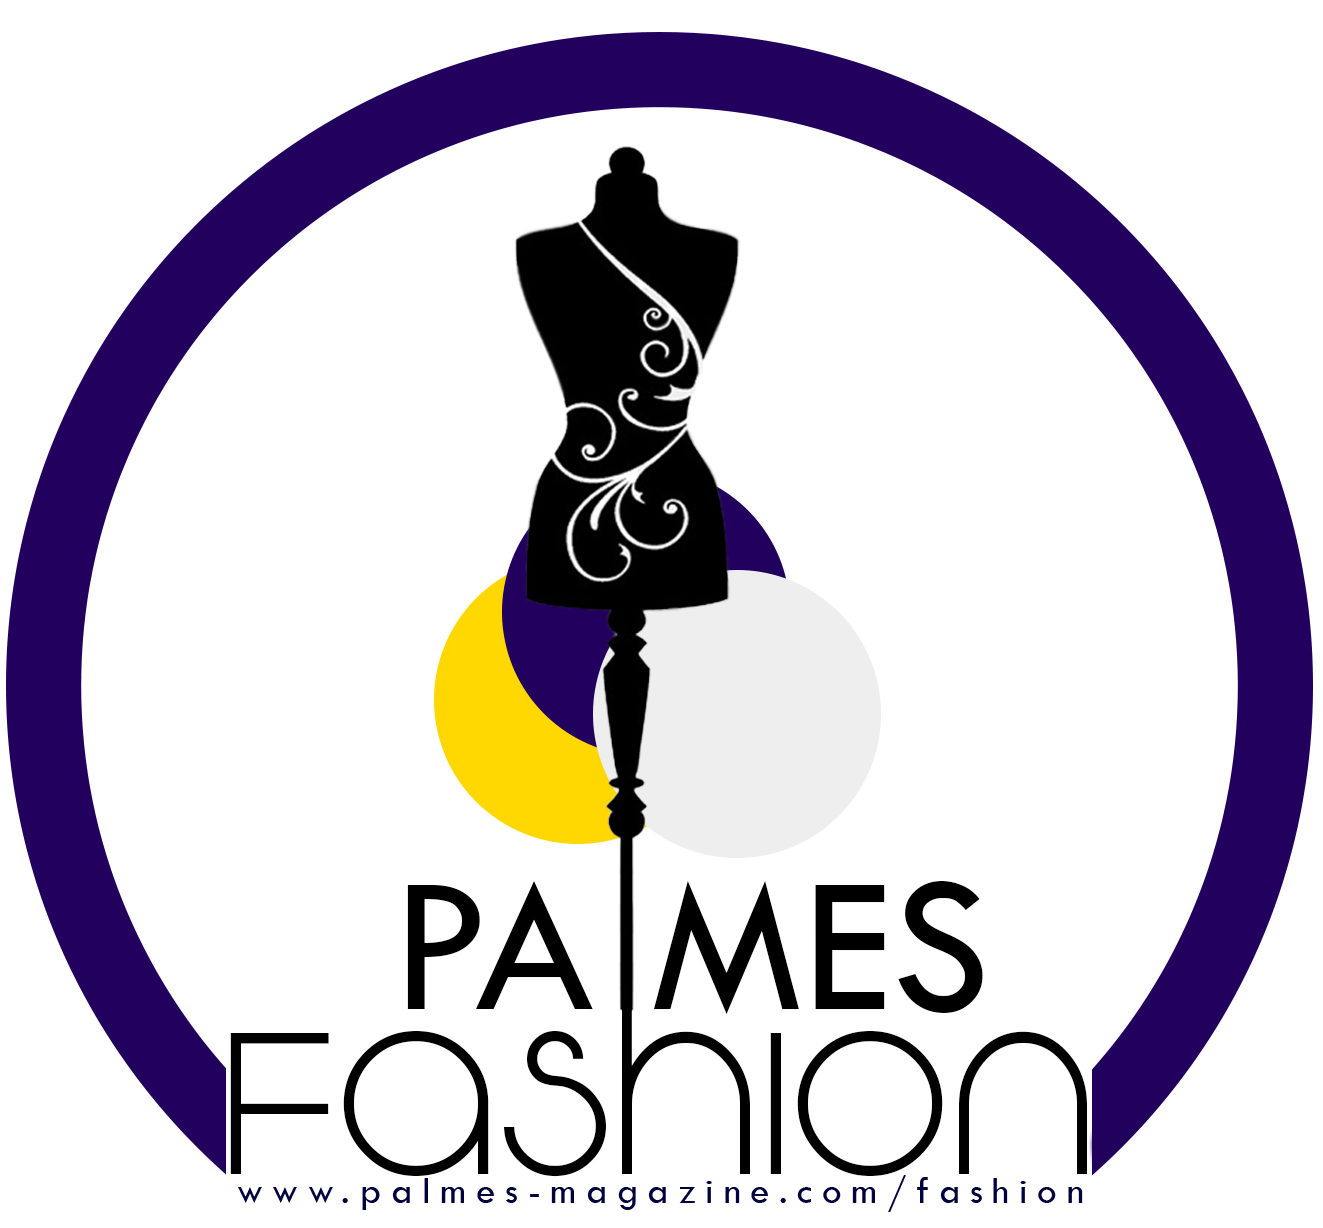 Palmes Fashion